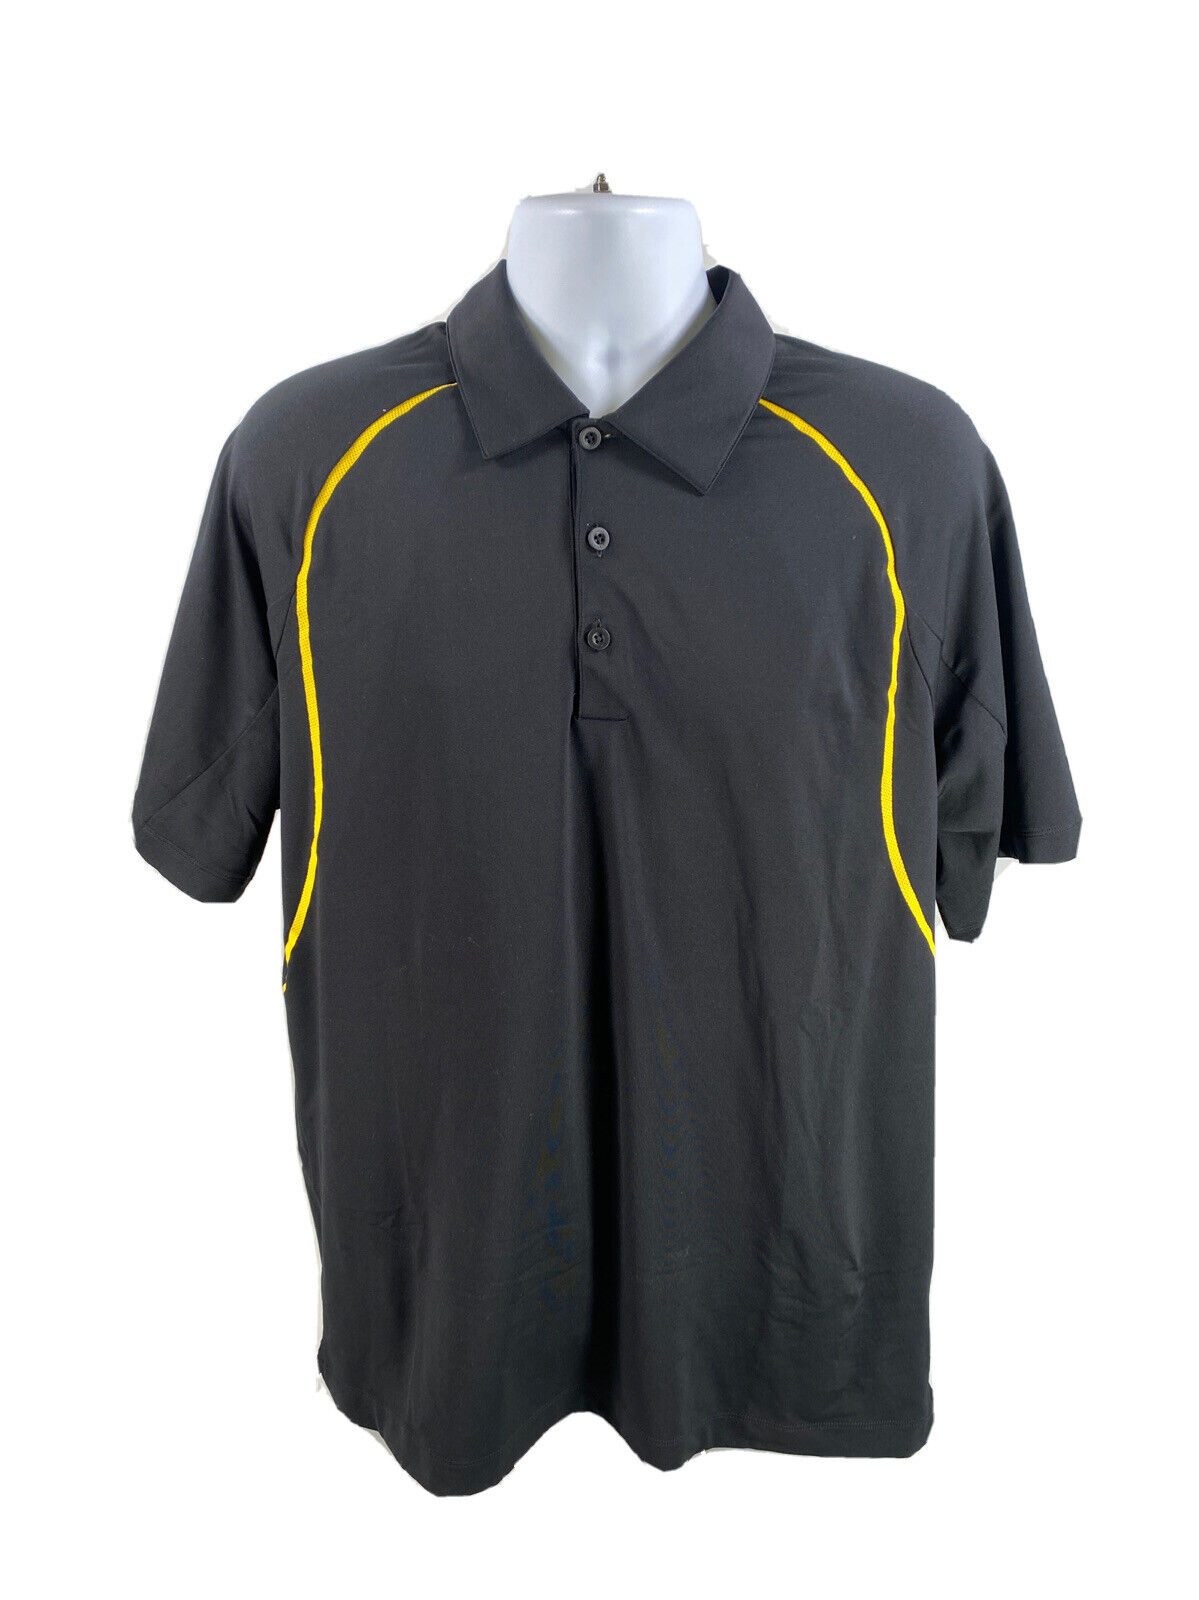 Under Armour Men's Blue/Yellow HeatGear Sleeveless Athletic Shirt - M